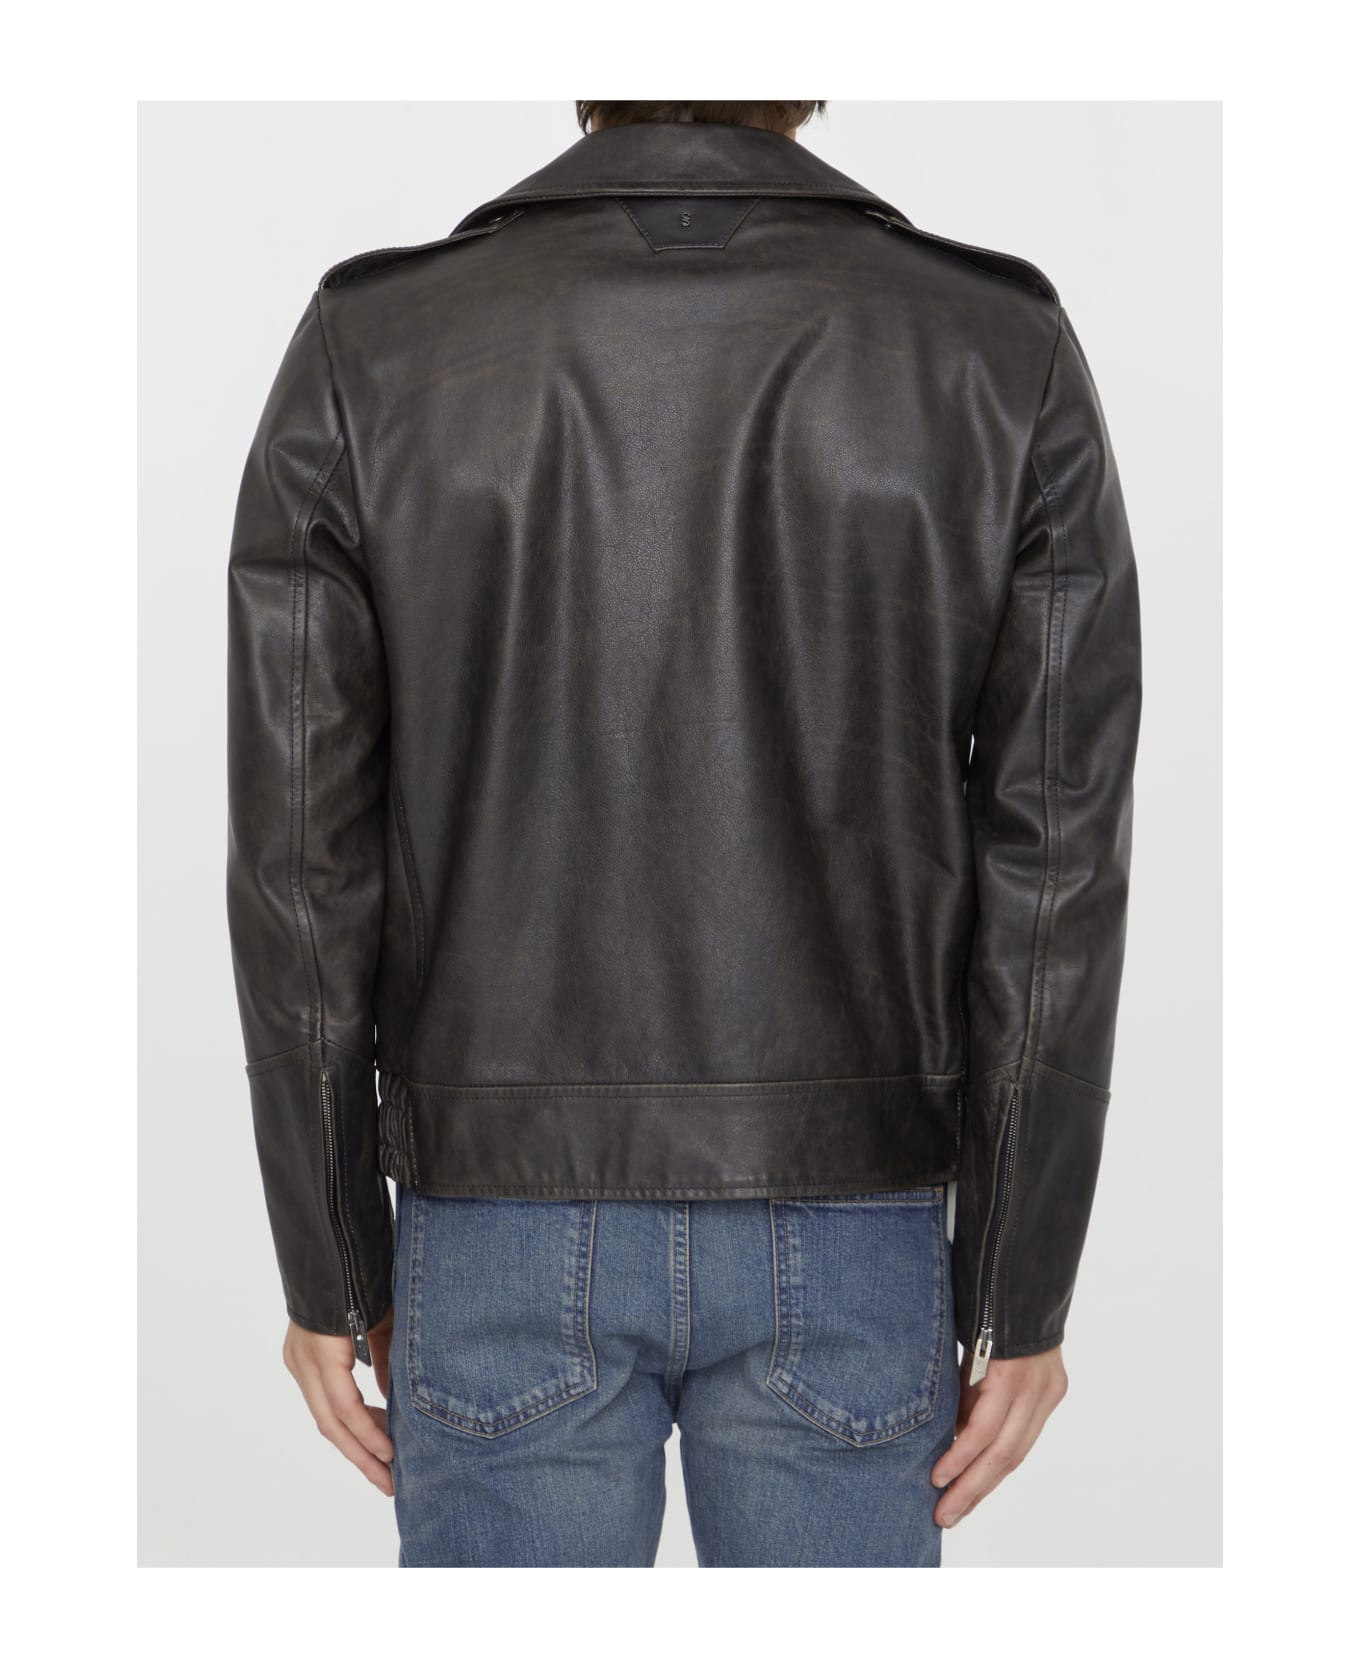 Salvatore grandioso Santoro Black Leather Jacket - BLACK